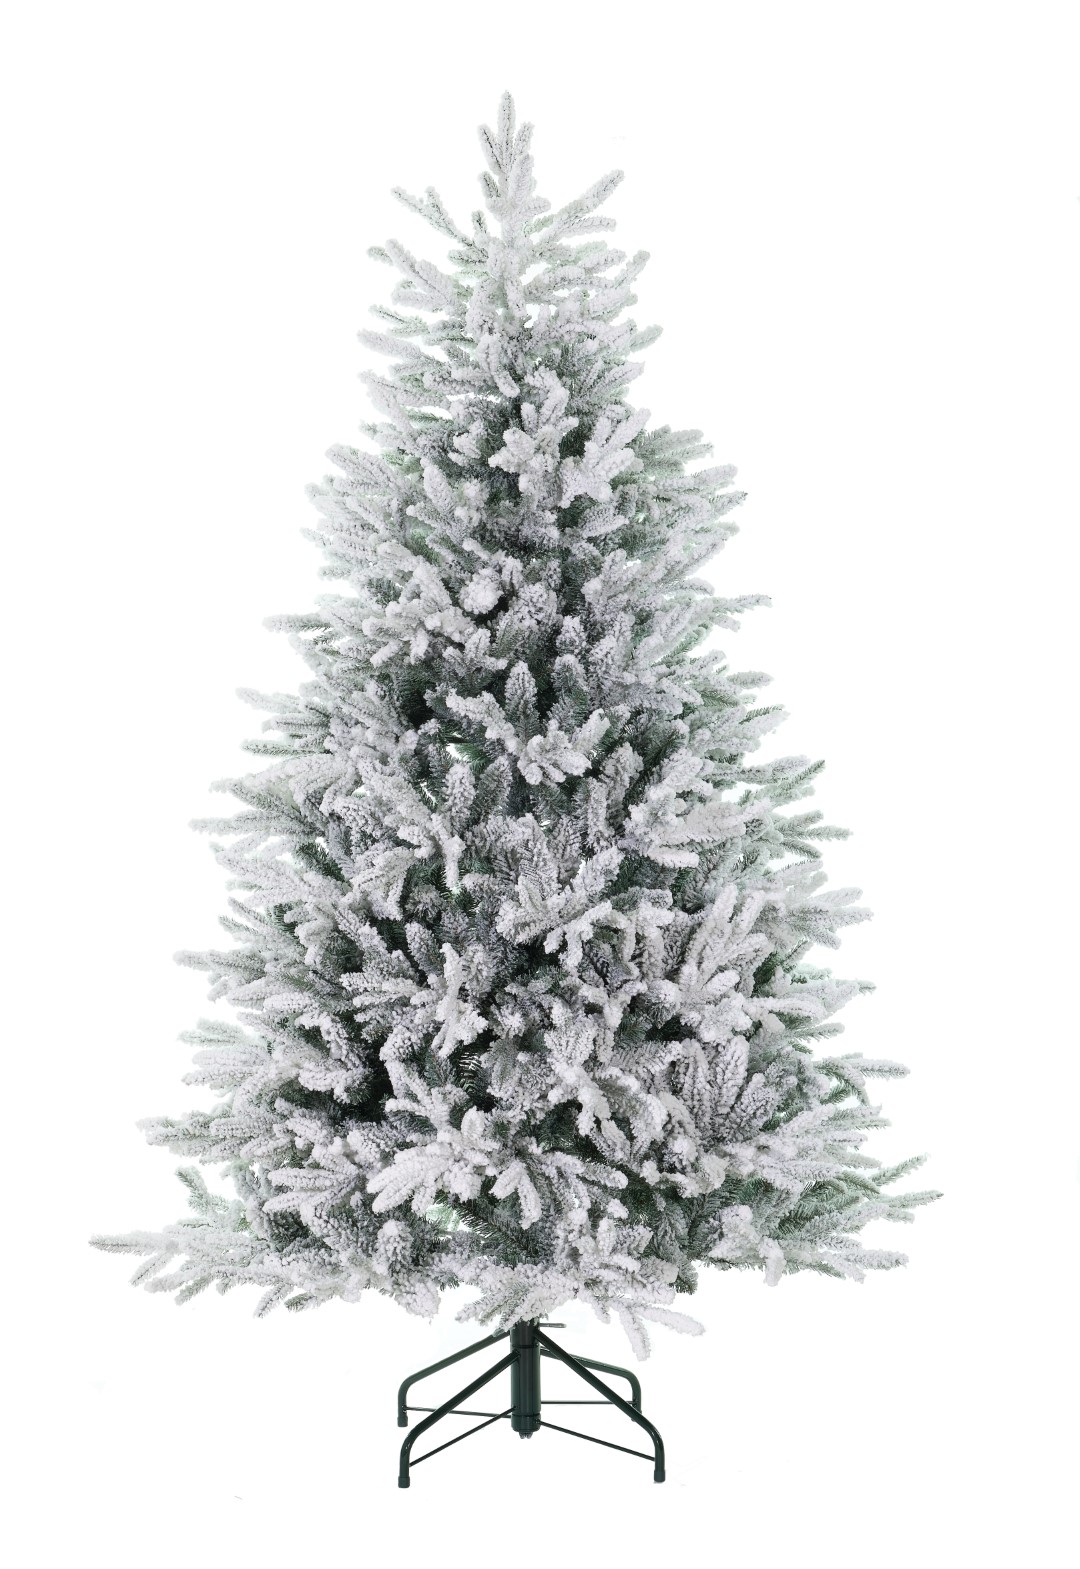 Kerstboom Flo x ed Le x ington Pine 180 cm kerstboom - Holiday Tree